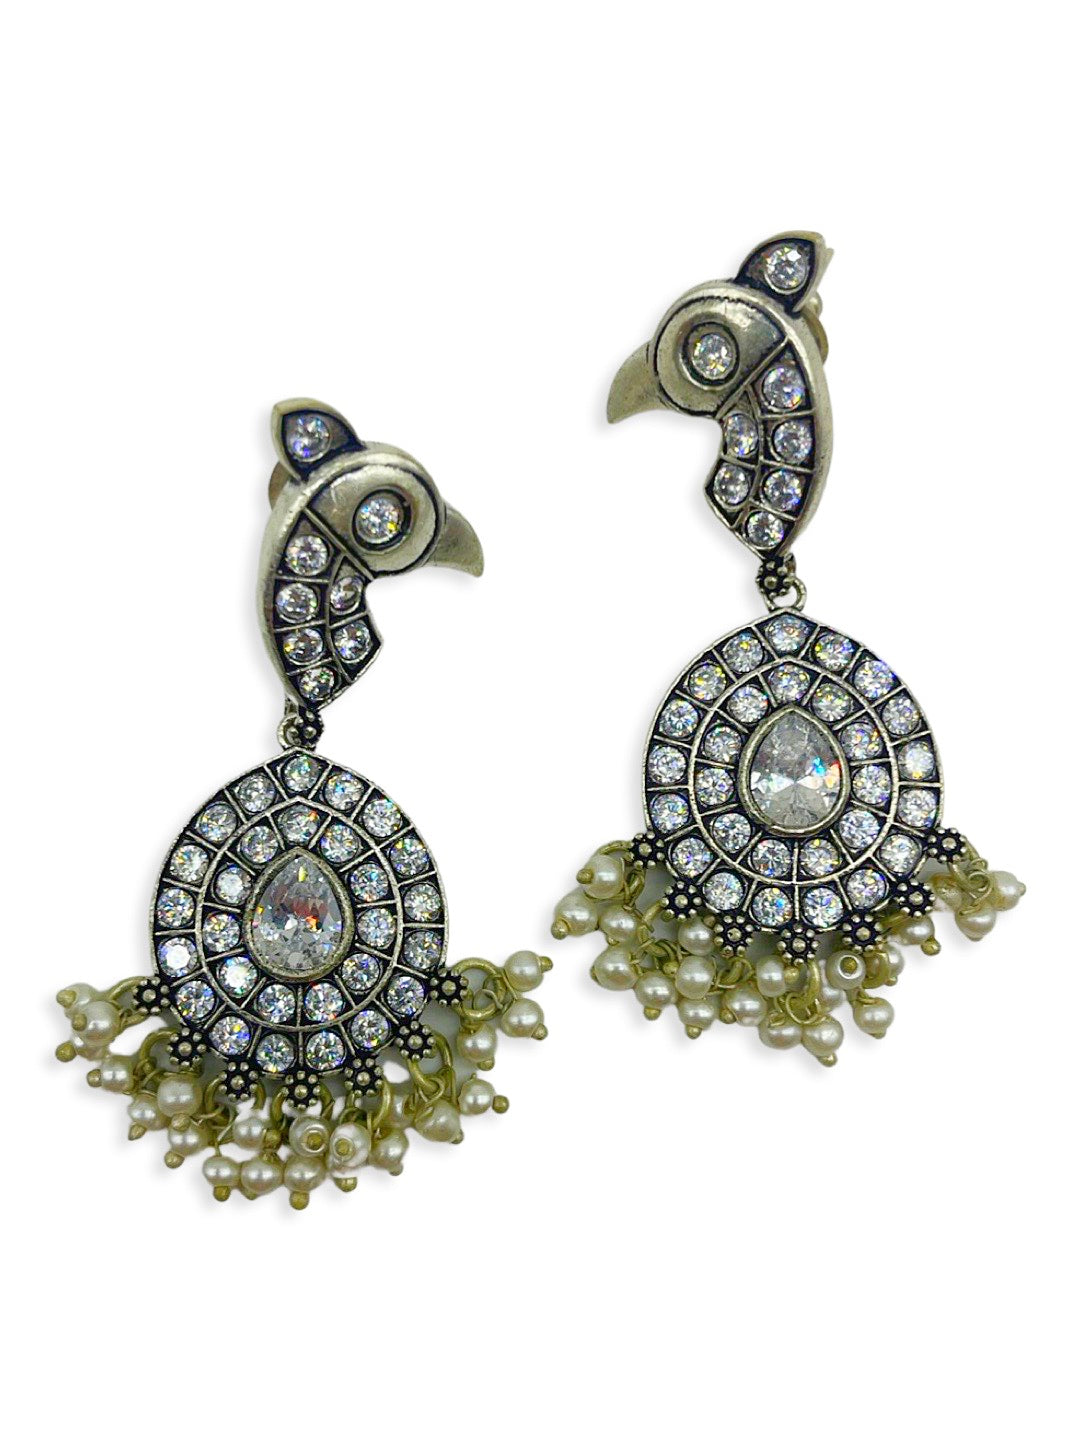 Buy Artisan black onyx earrings, Black oval earrings sterling silver bezel  online at aStudio1980.com